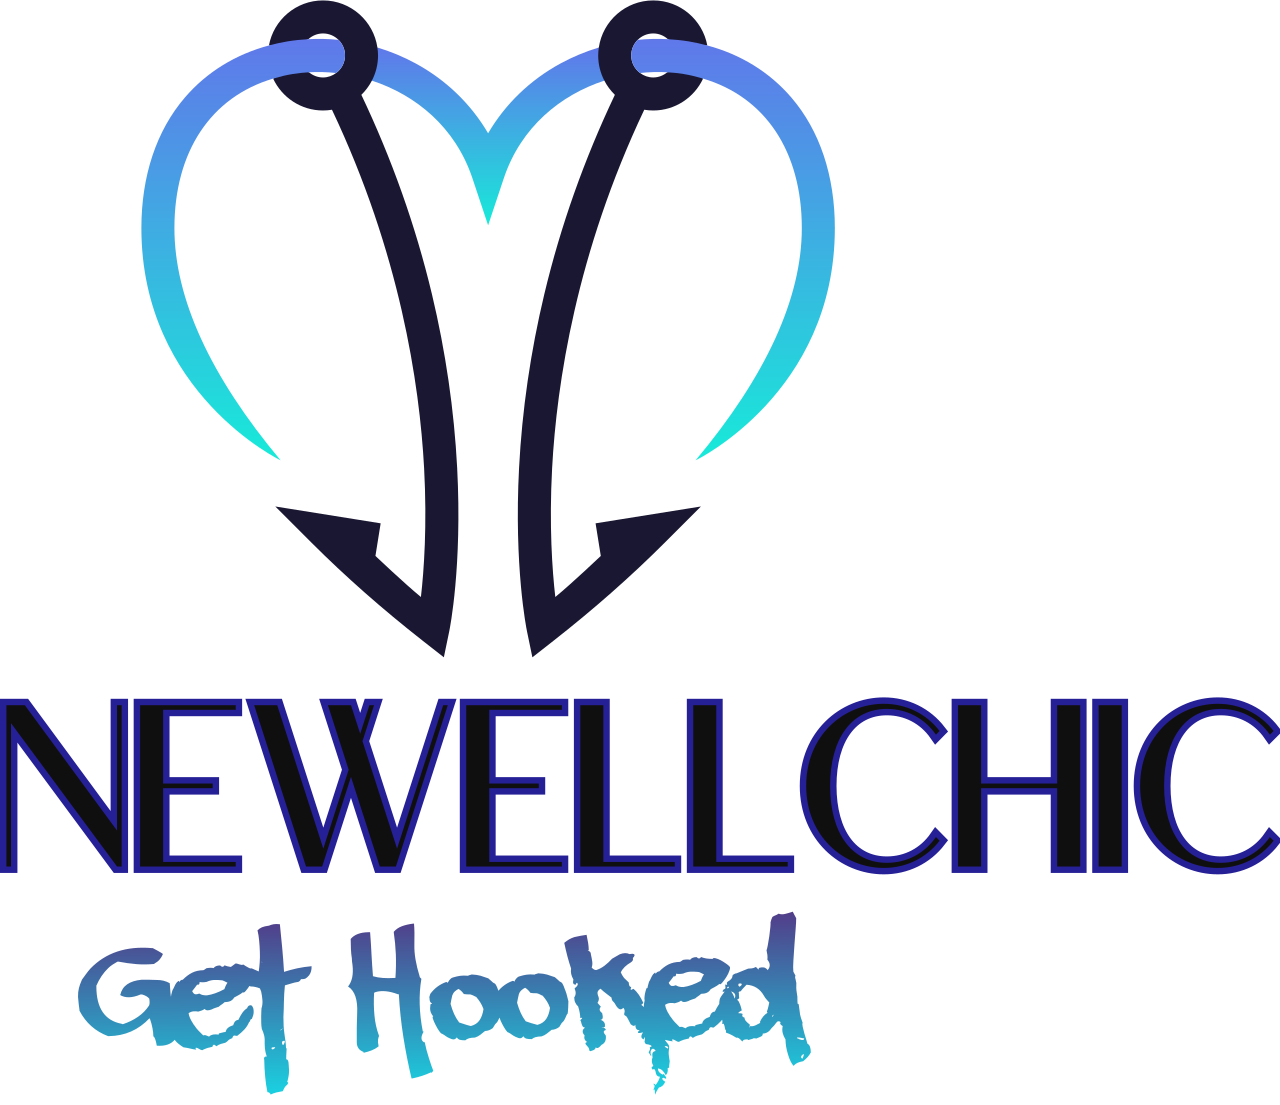 Newellchic's logo